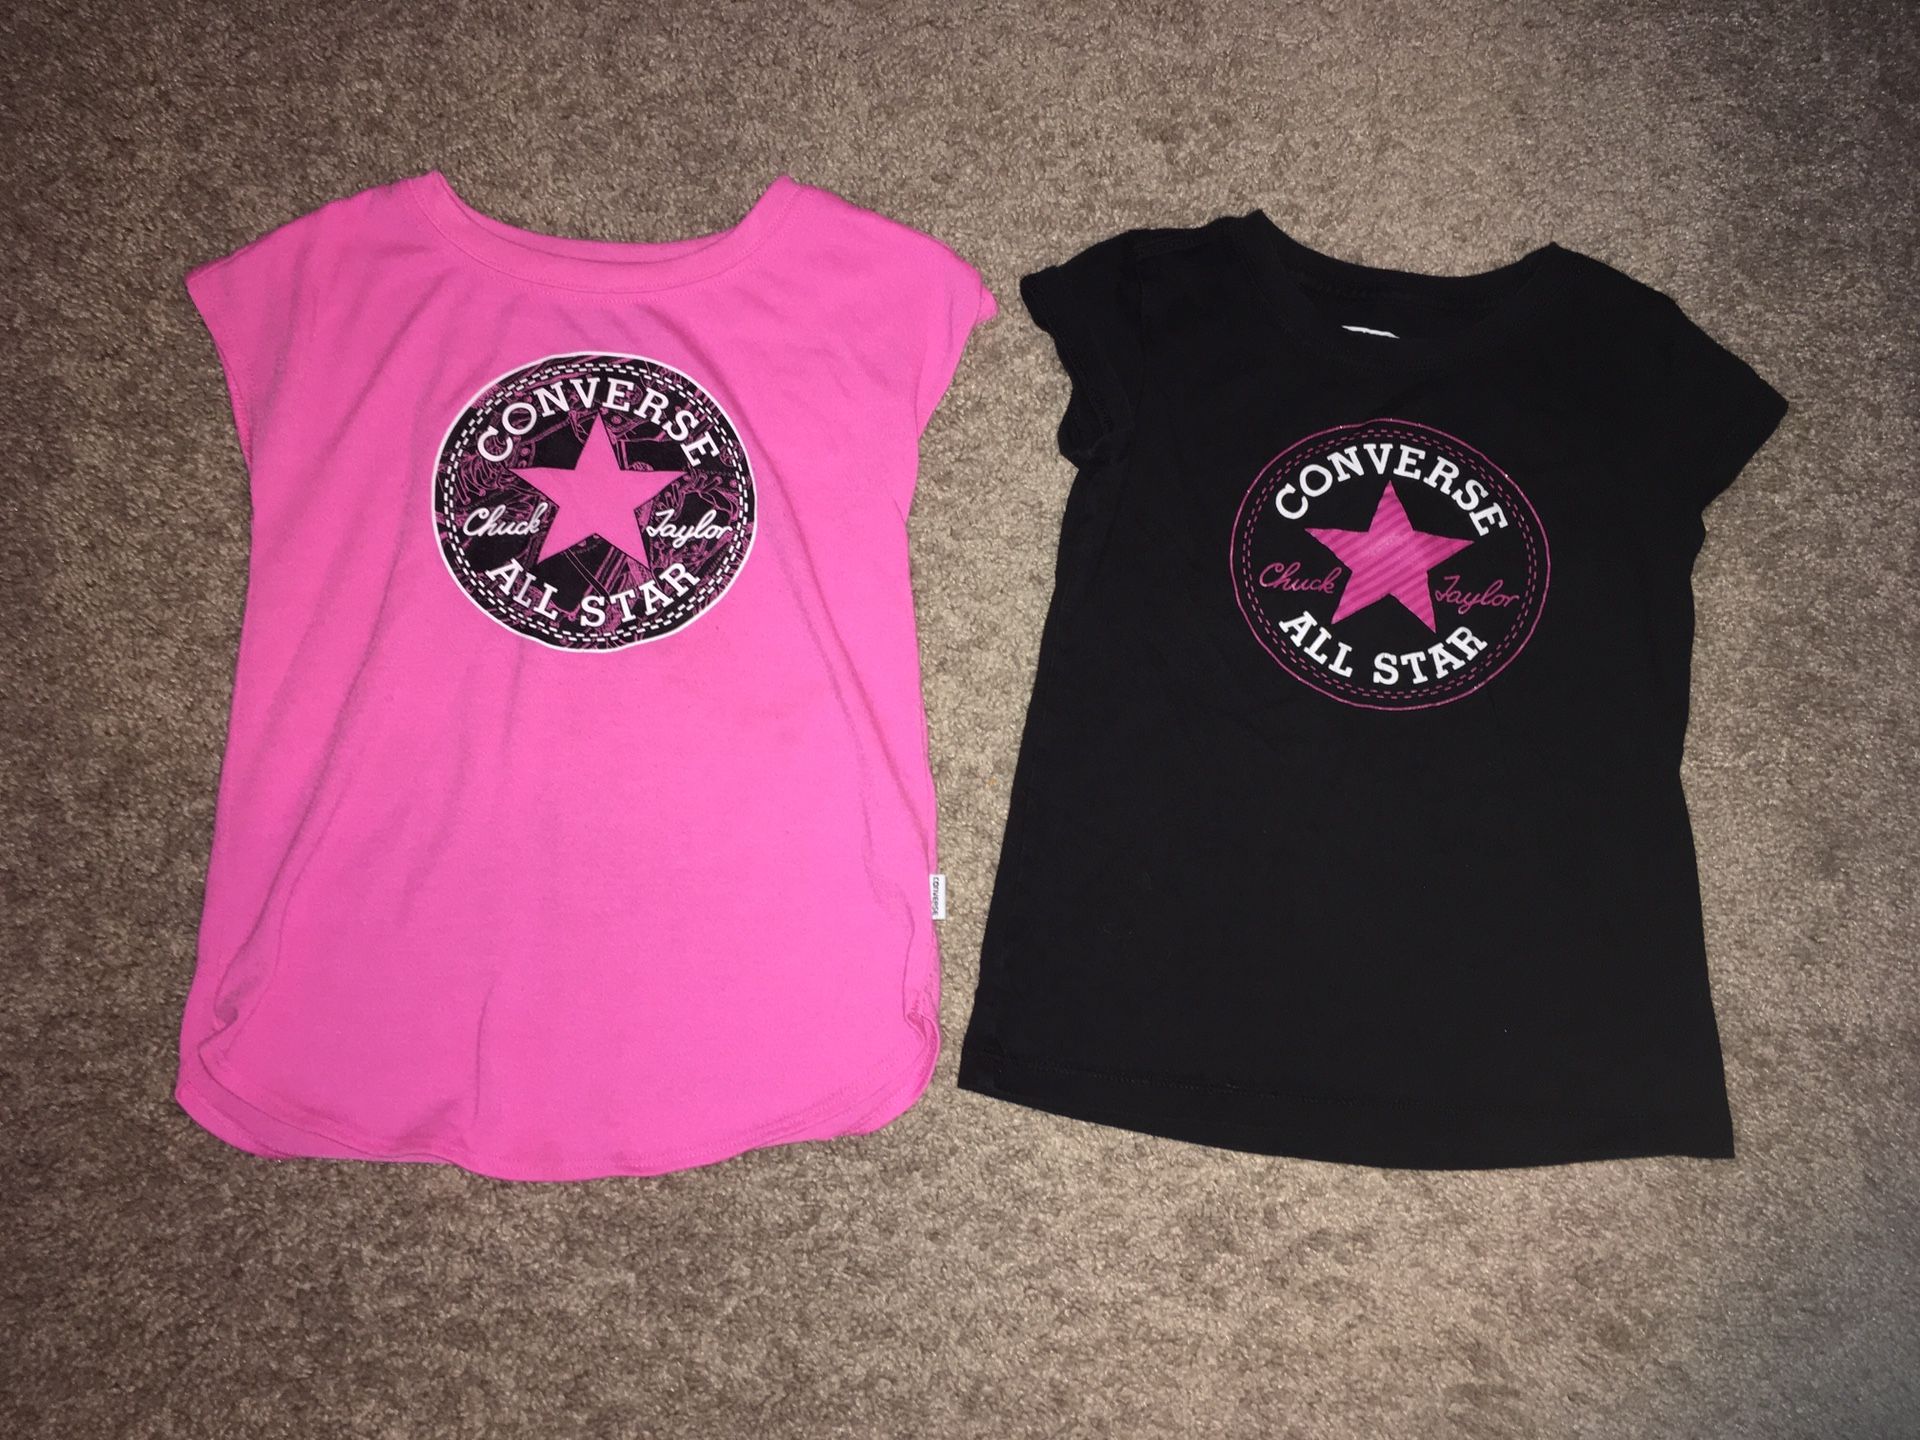 Pink and black converse shirts size 5/6